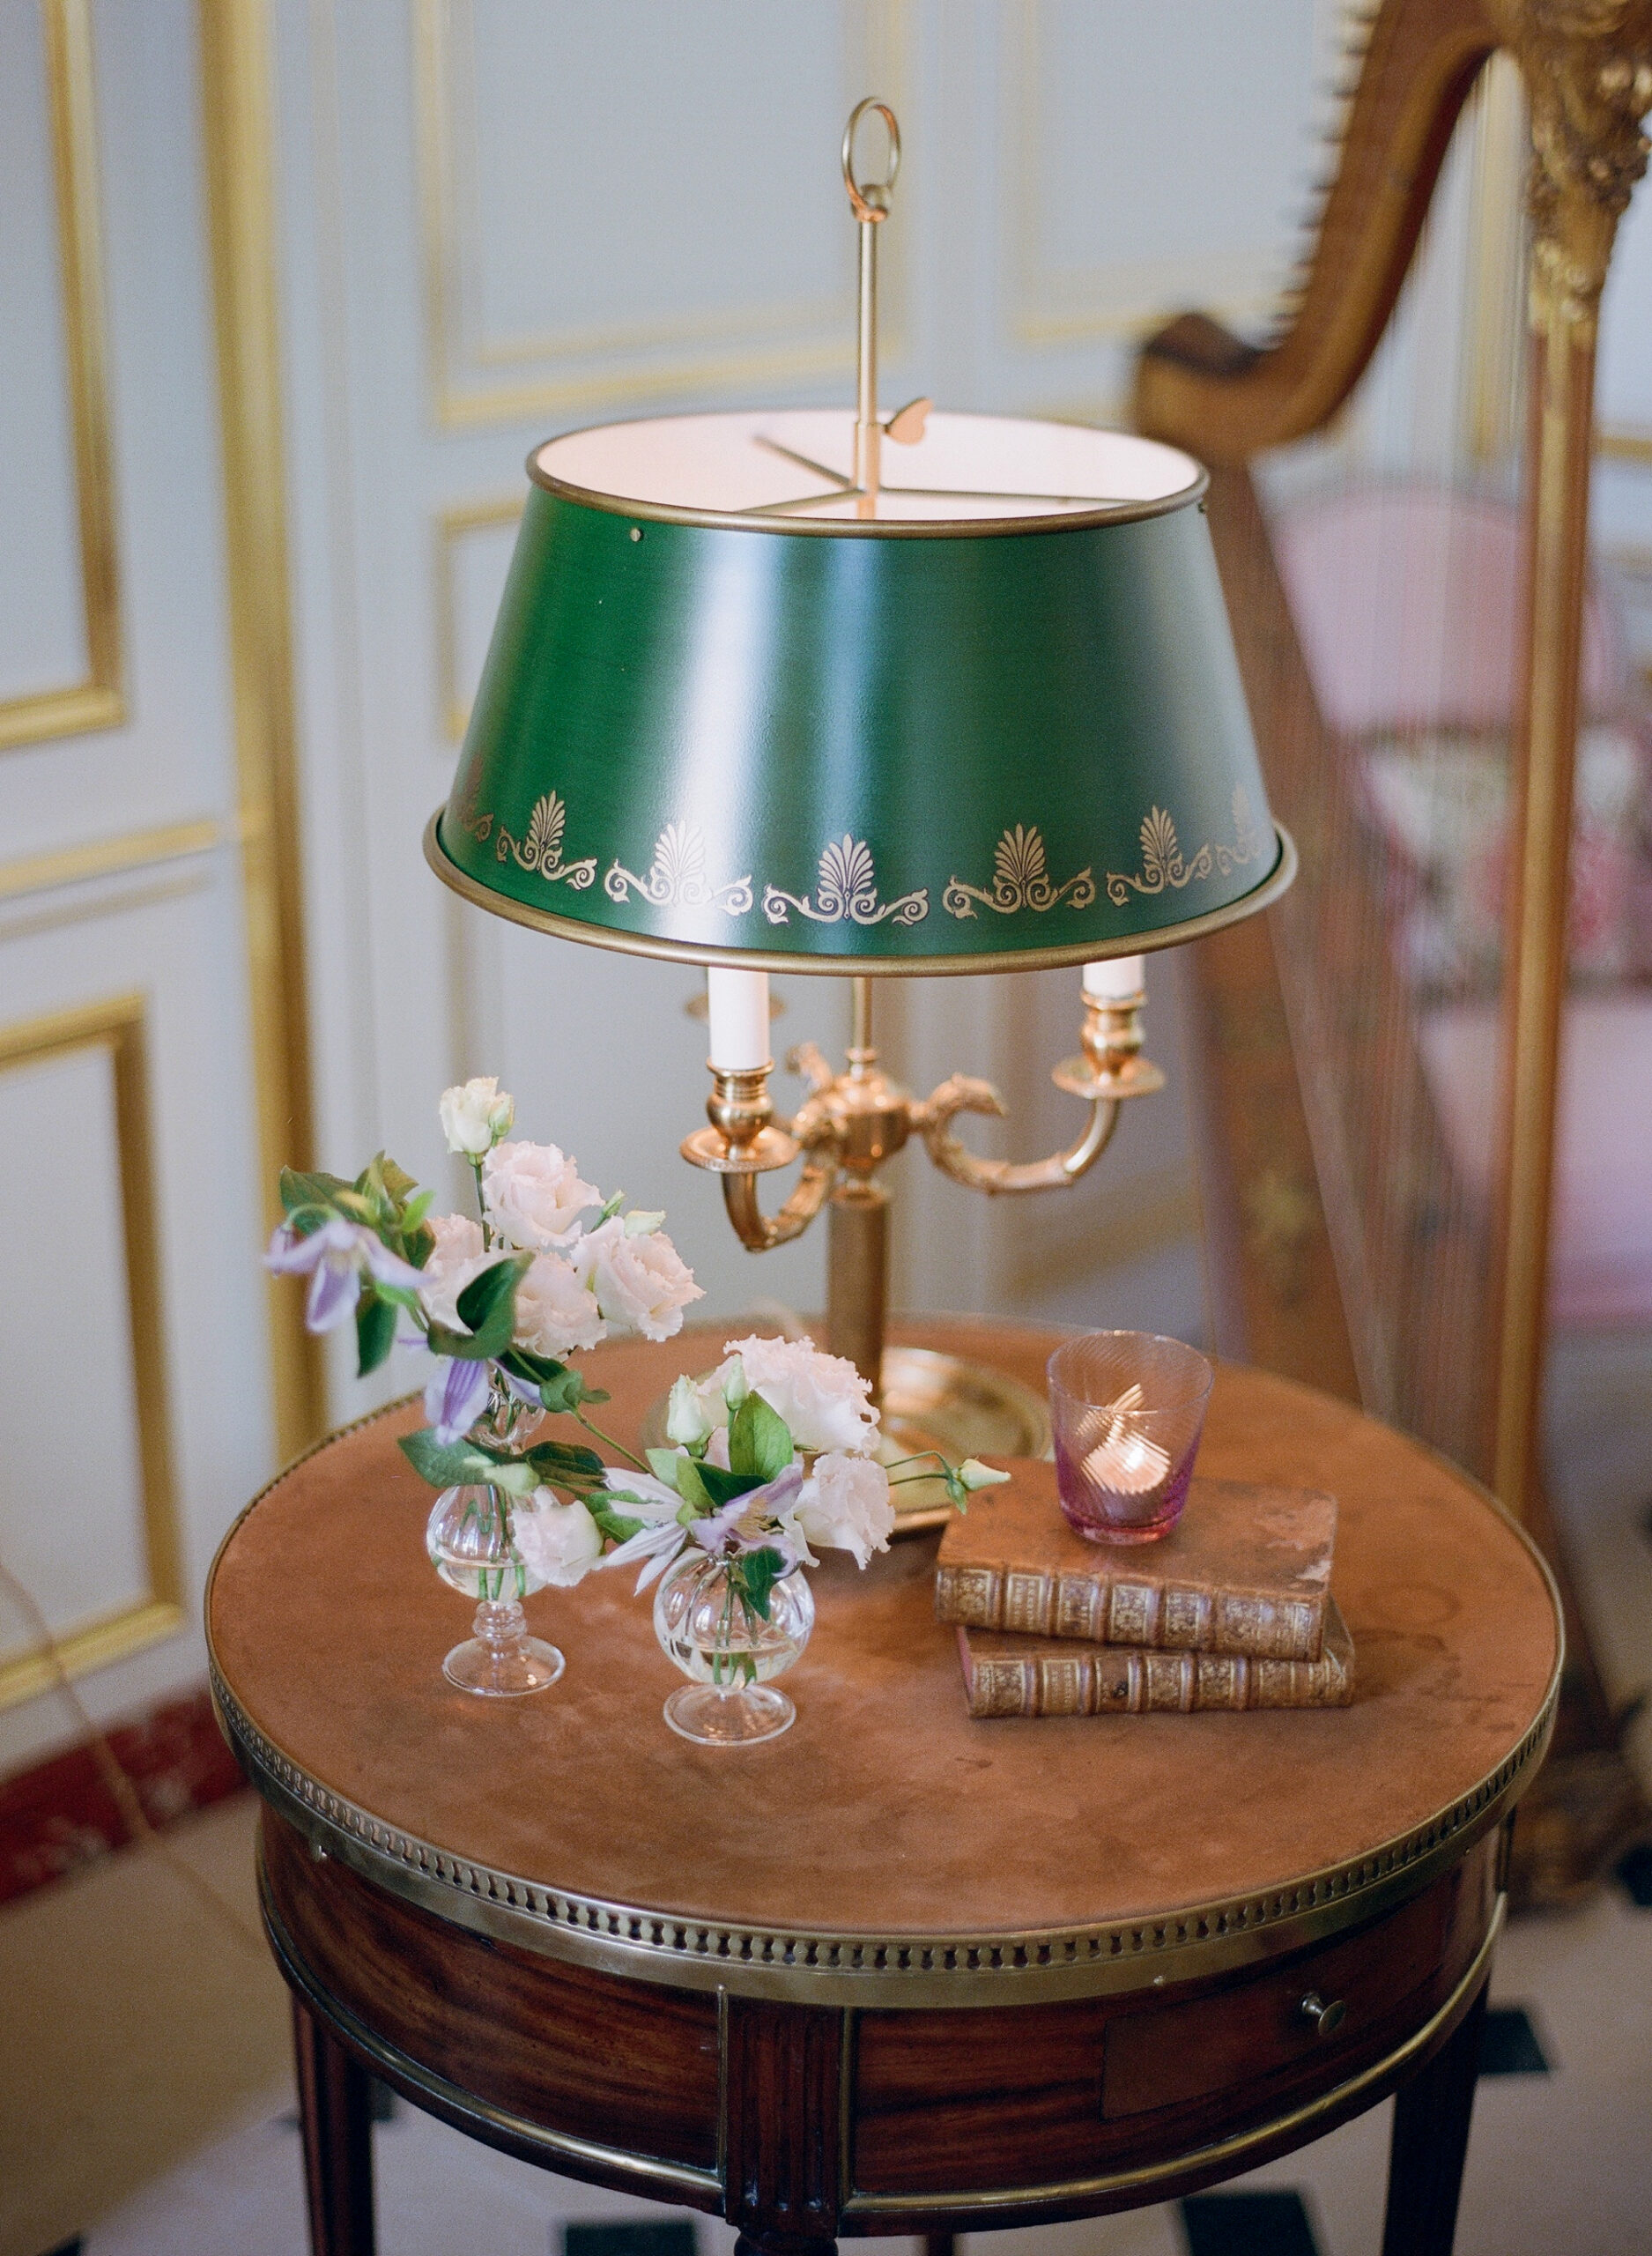 Versailles Wedding Photographer | Chateau de Versailles | Le Grand Controle | Molly Carr Photography